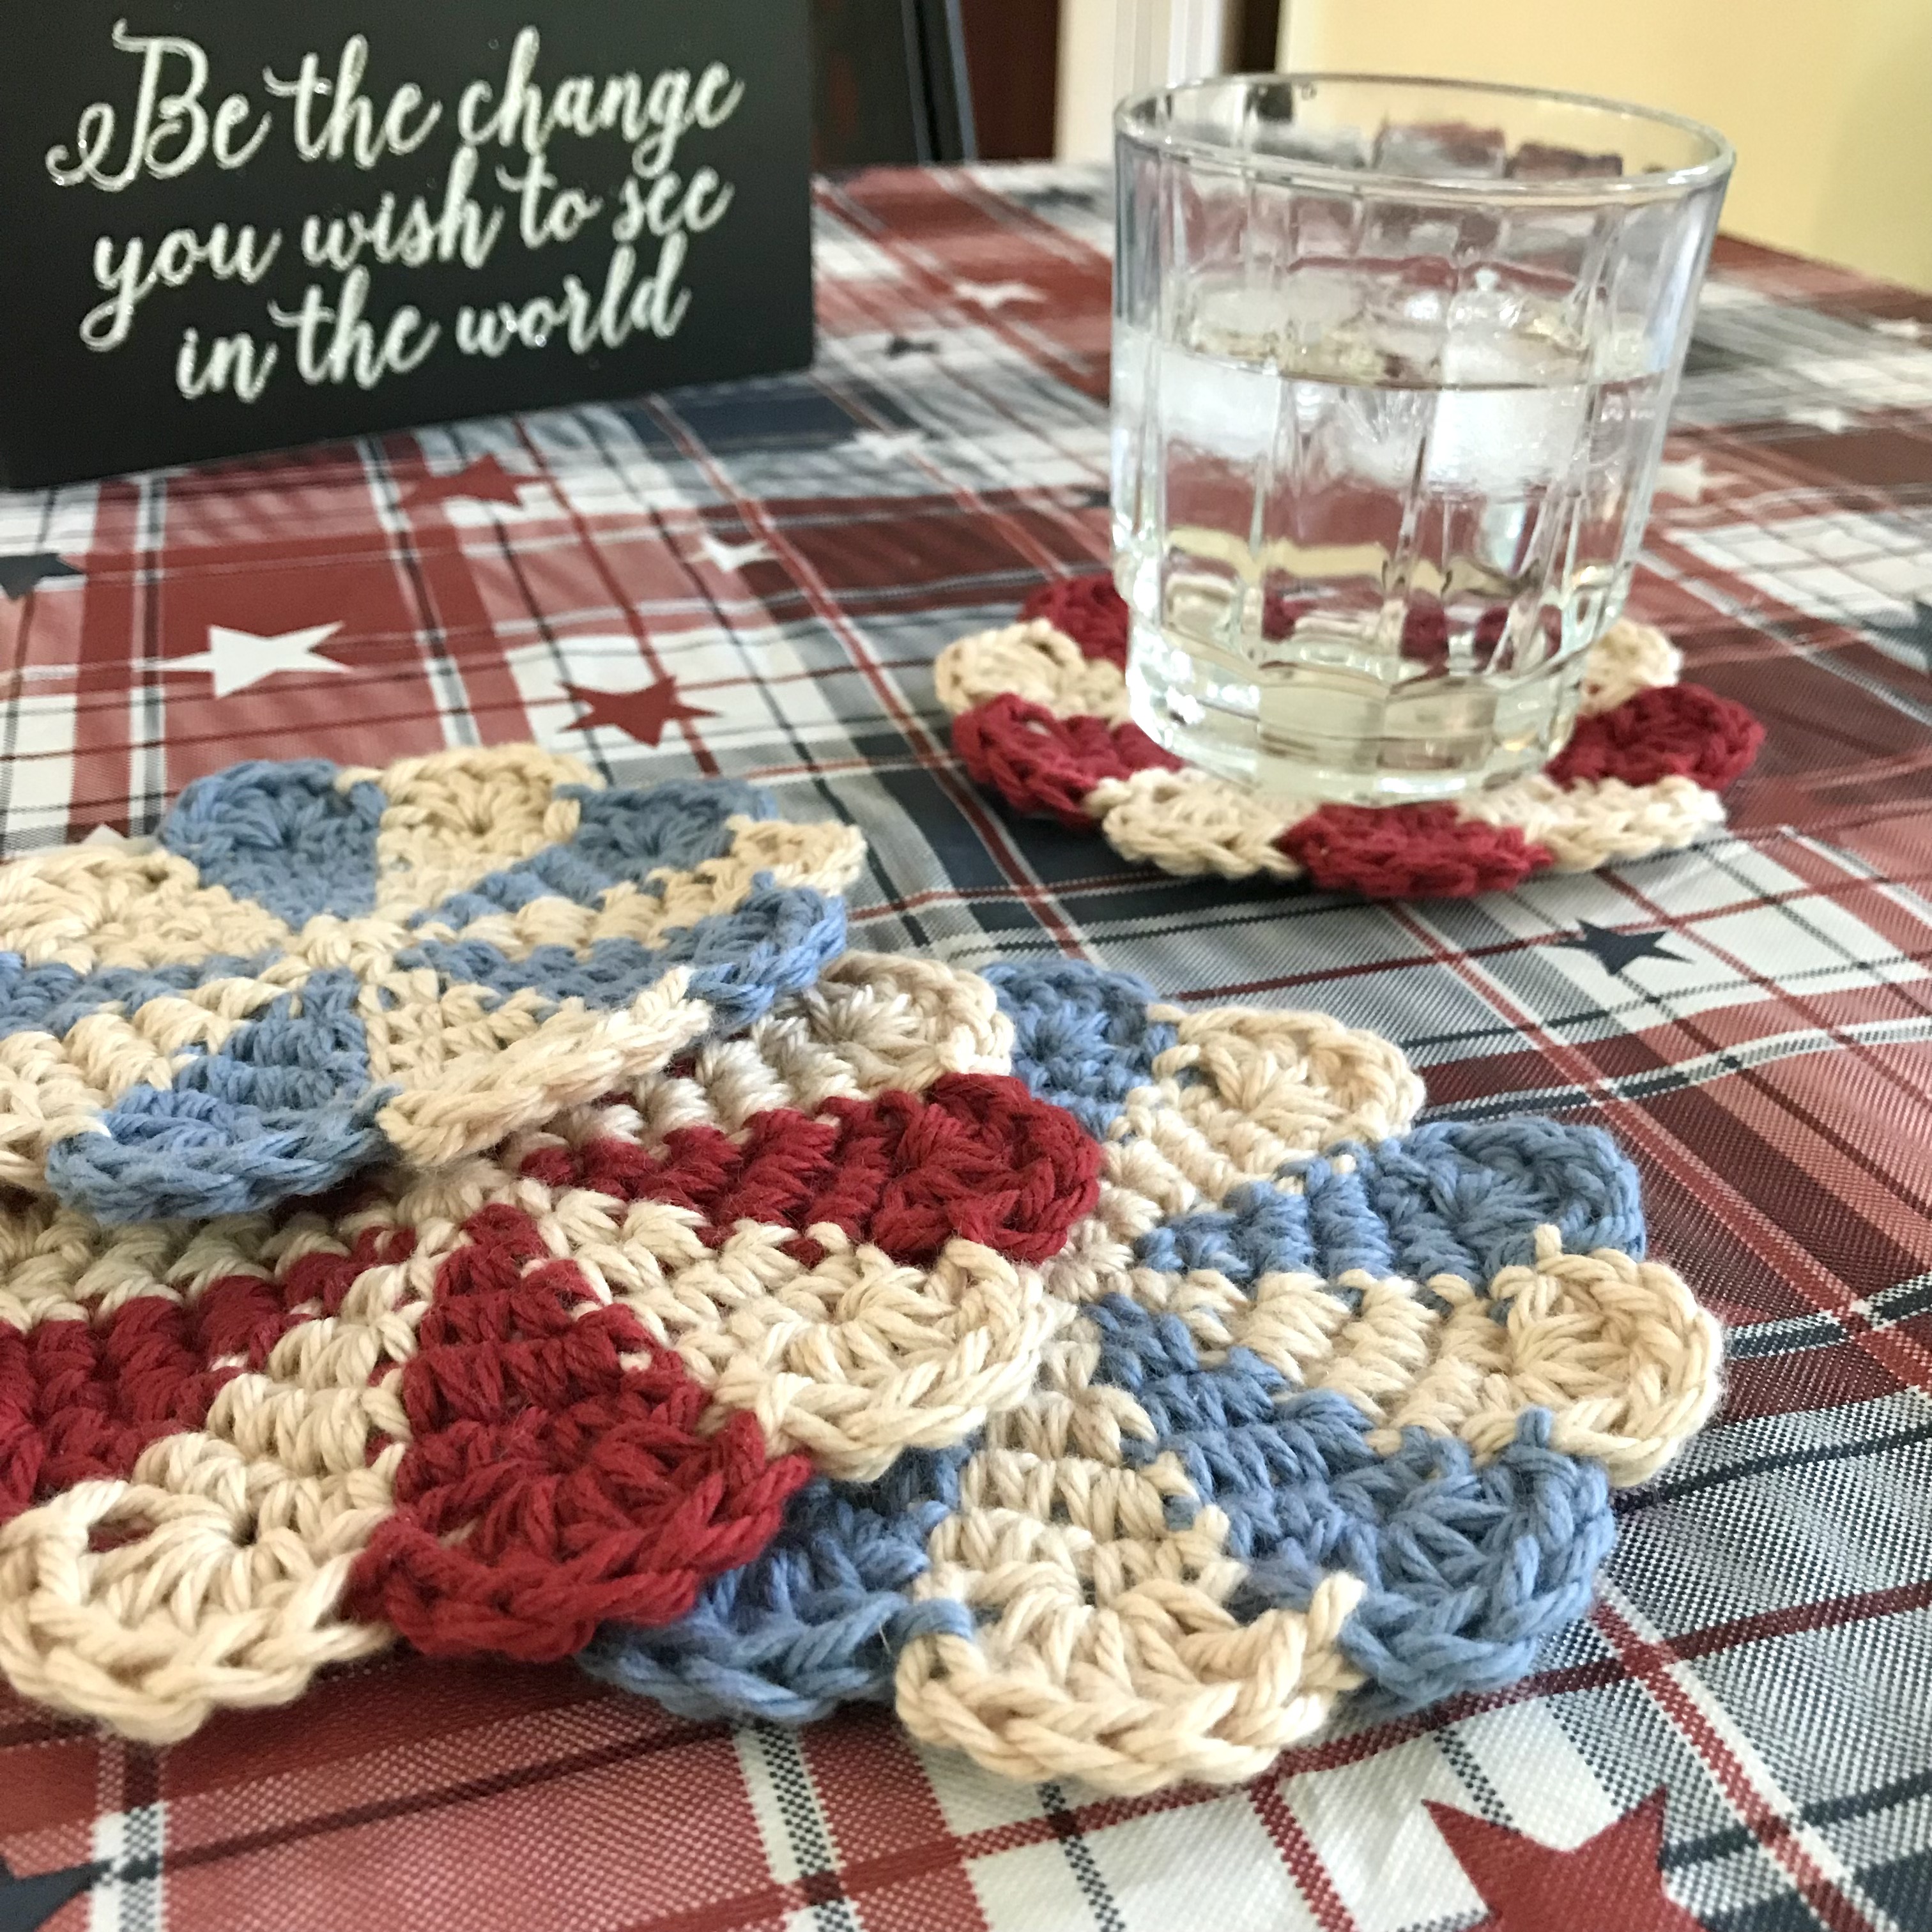 Crochet Steering Wheel Cover Patterns - Crochet 365 Knit Too